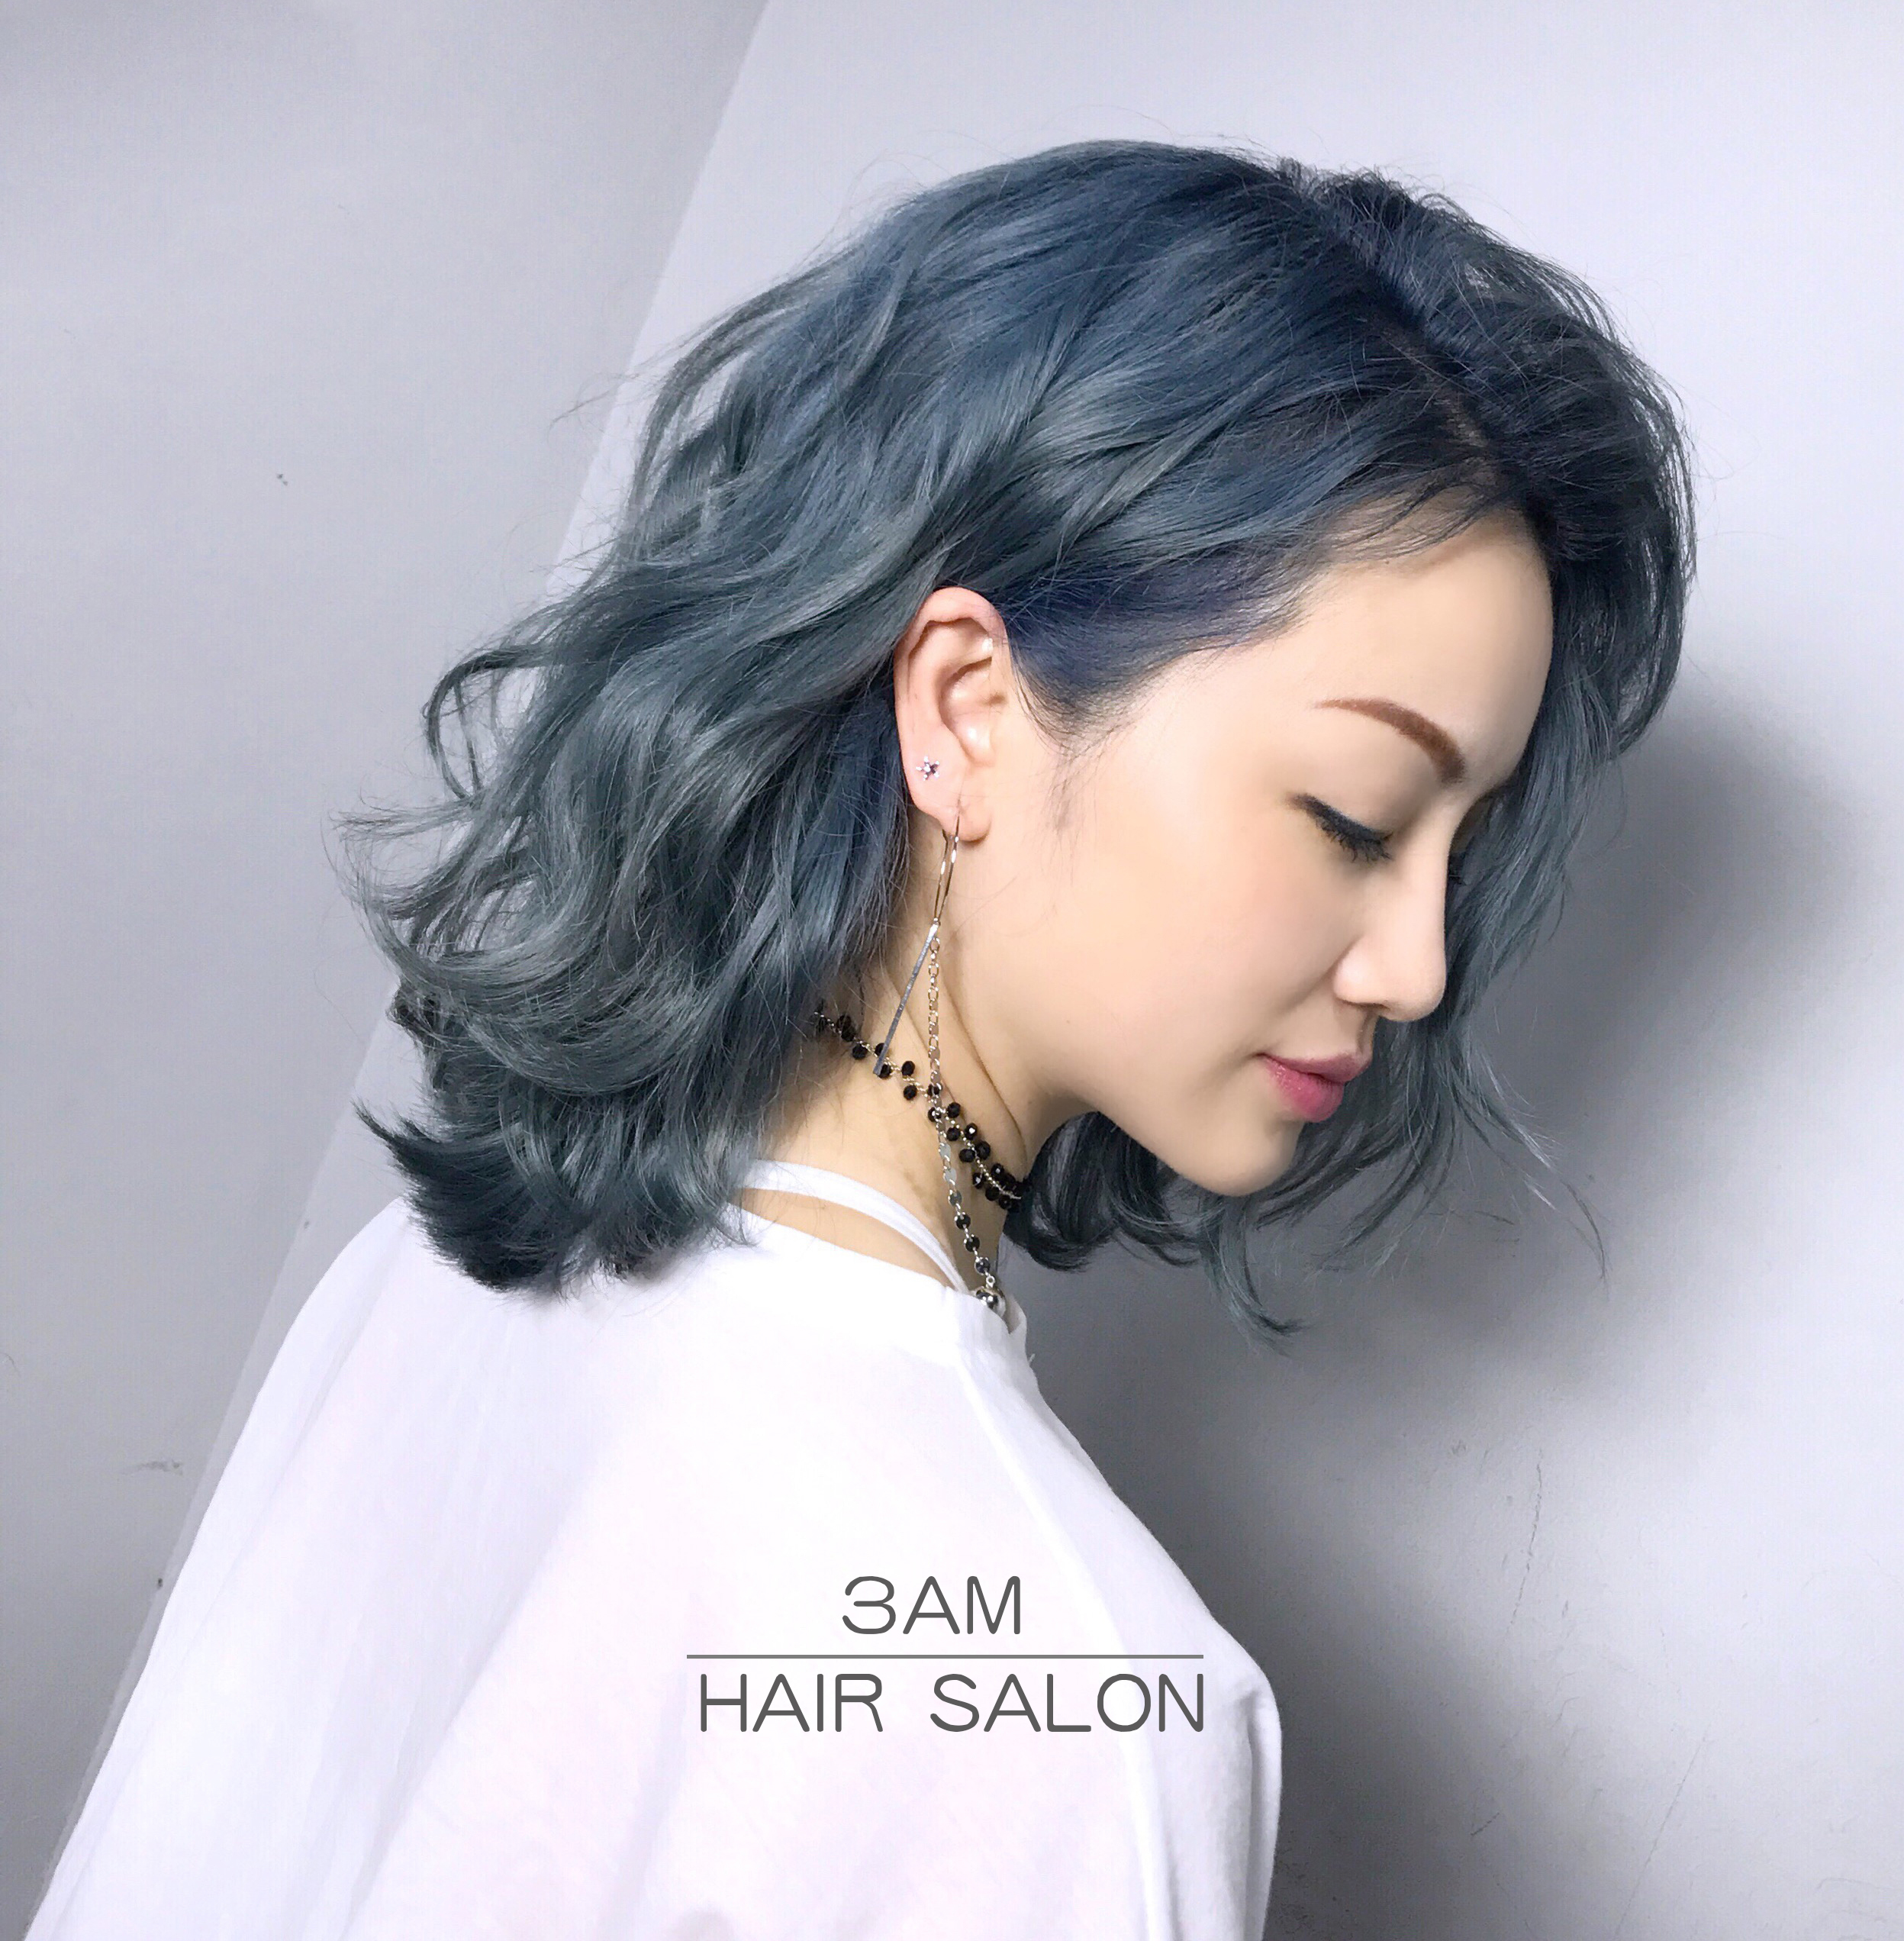 3am hair salon凌晨三点国际时尚美发沙龙